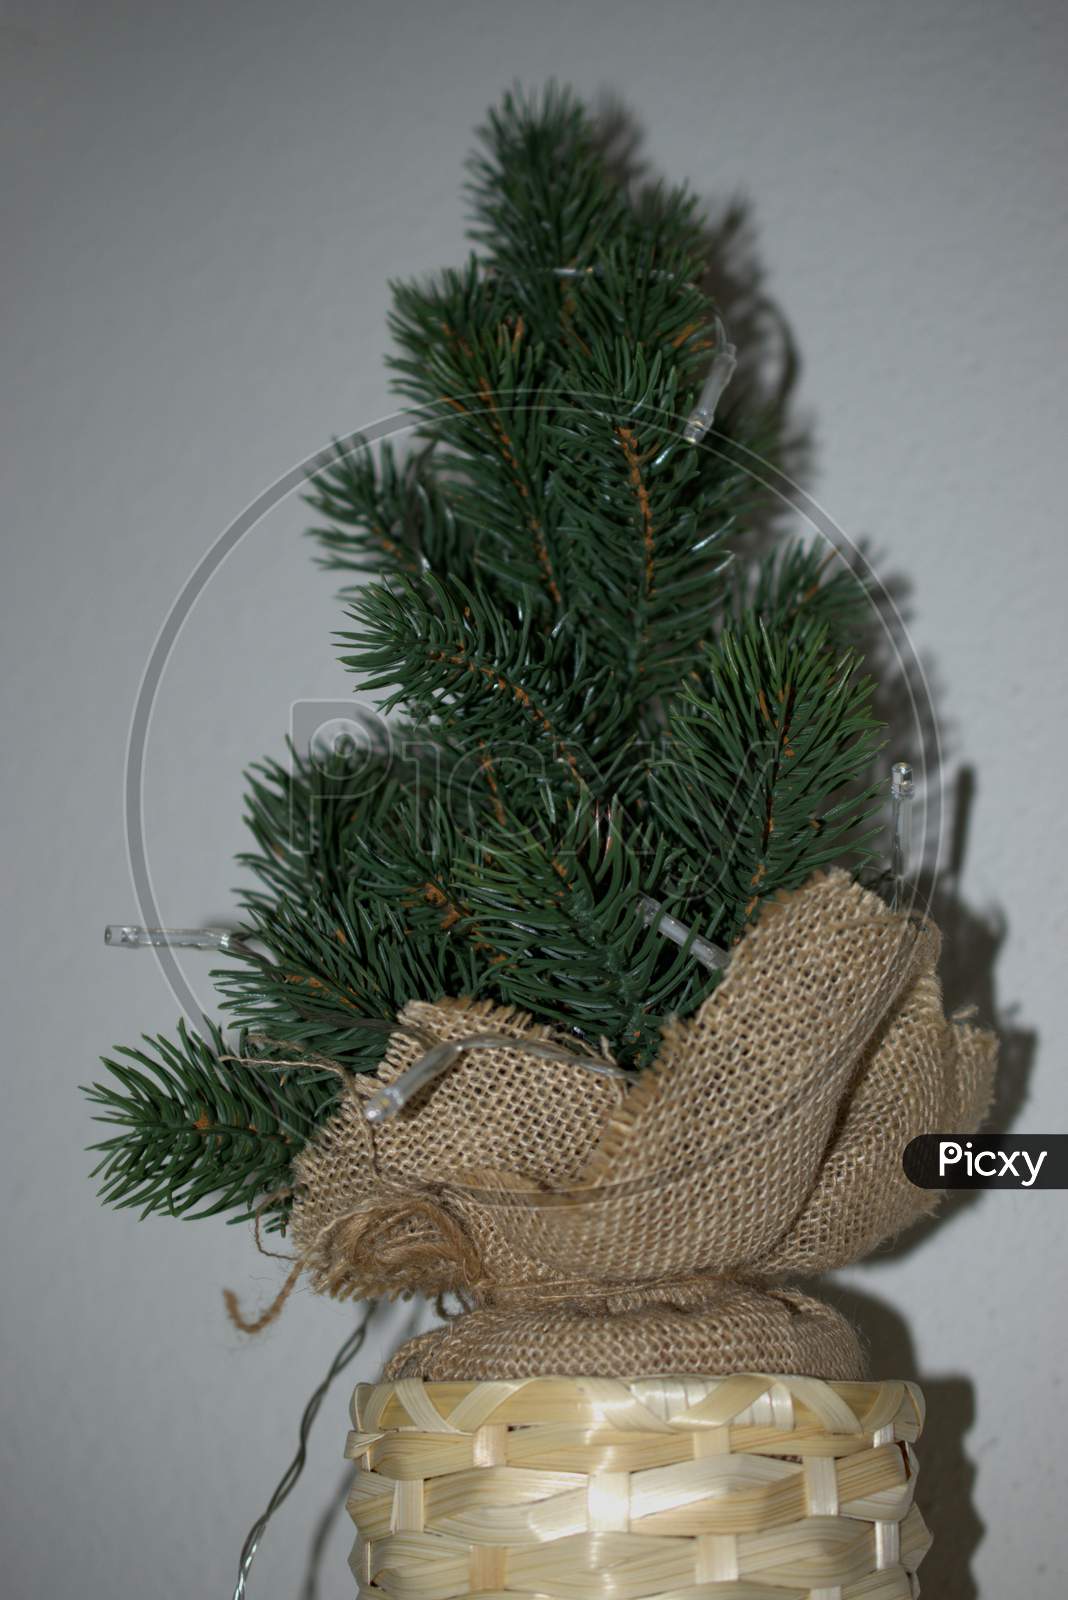 Little Green Fir Tree For Christmas Decoration 21.12.2020